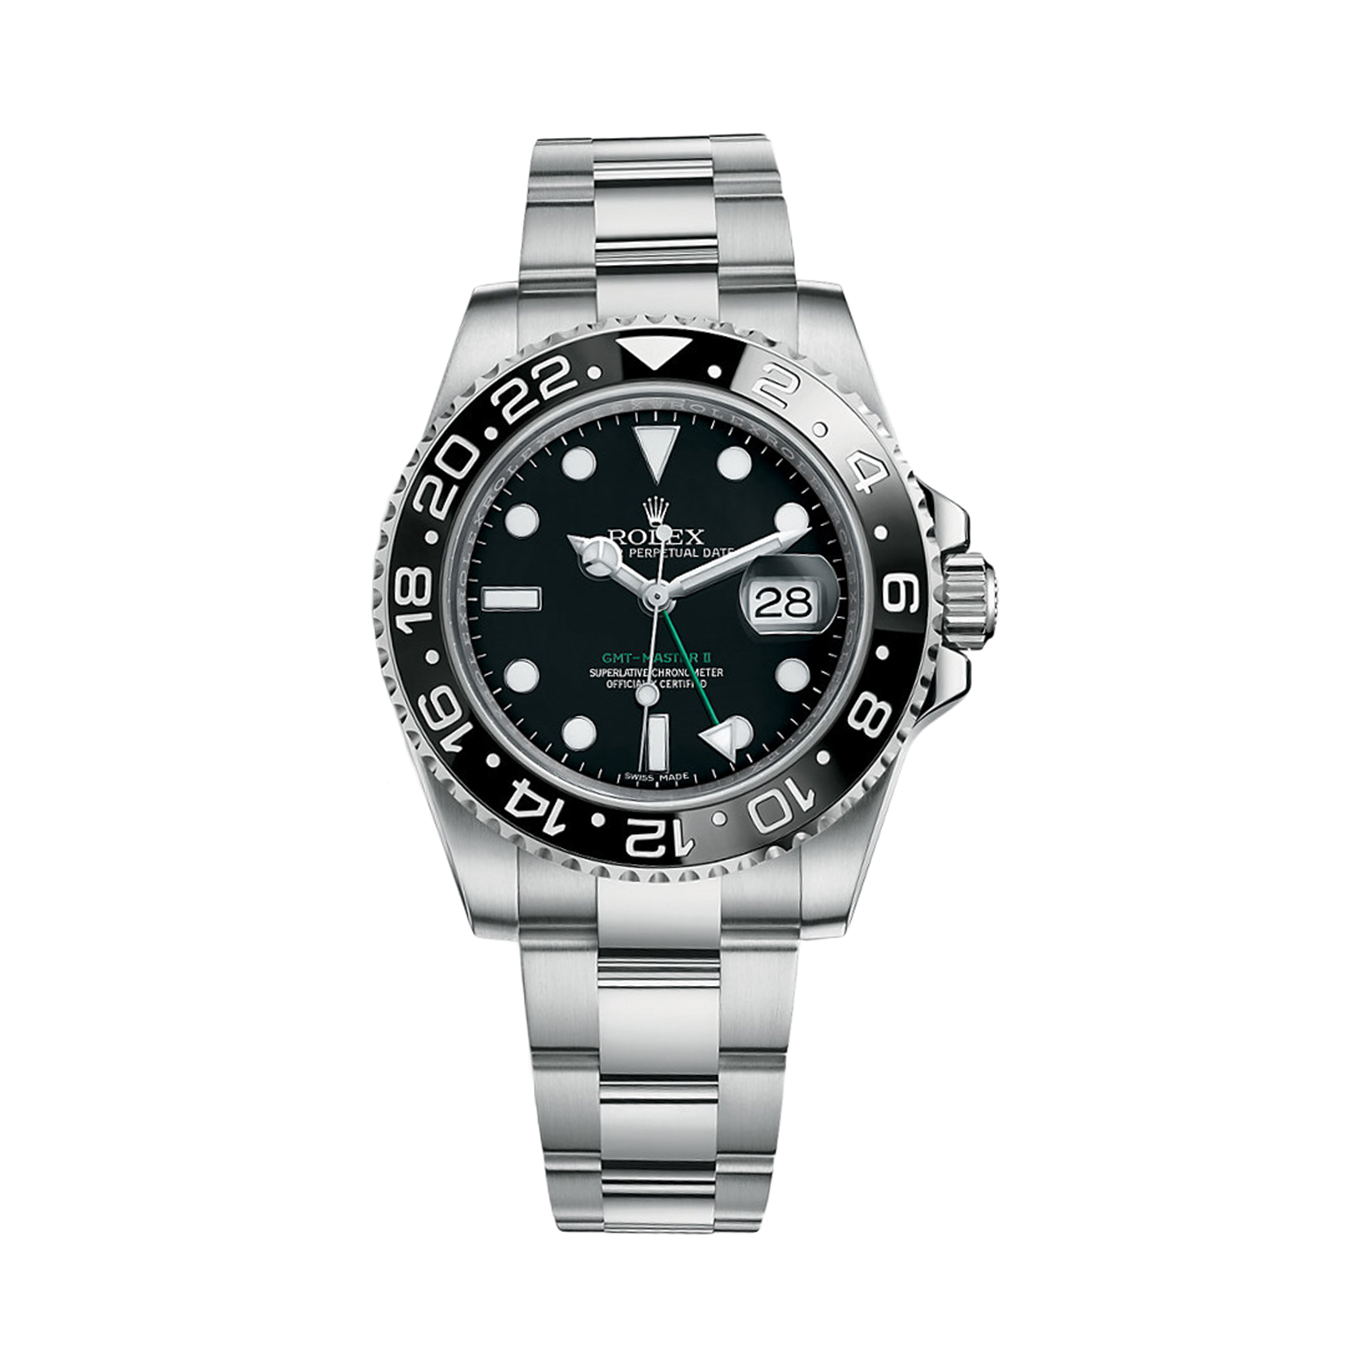 GMT-Master II 116710LN Stainless Steel Watch (Black)